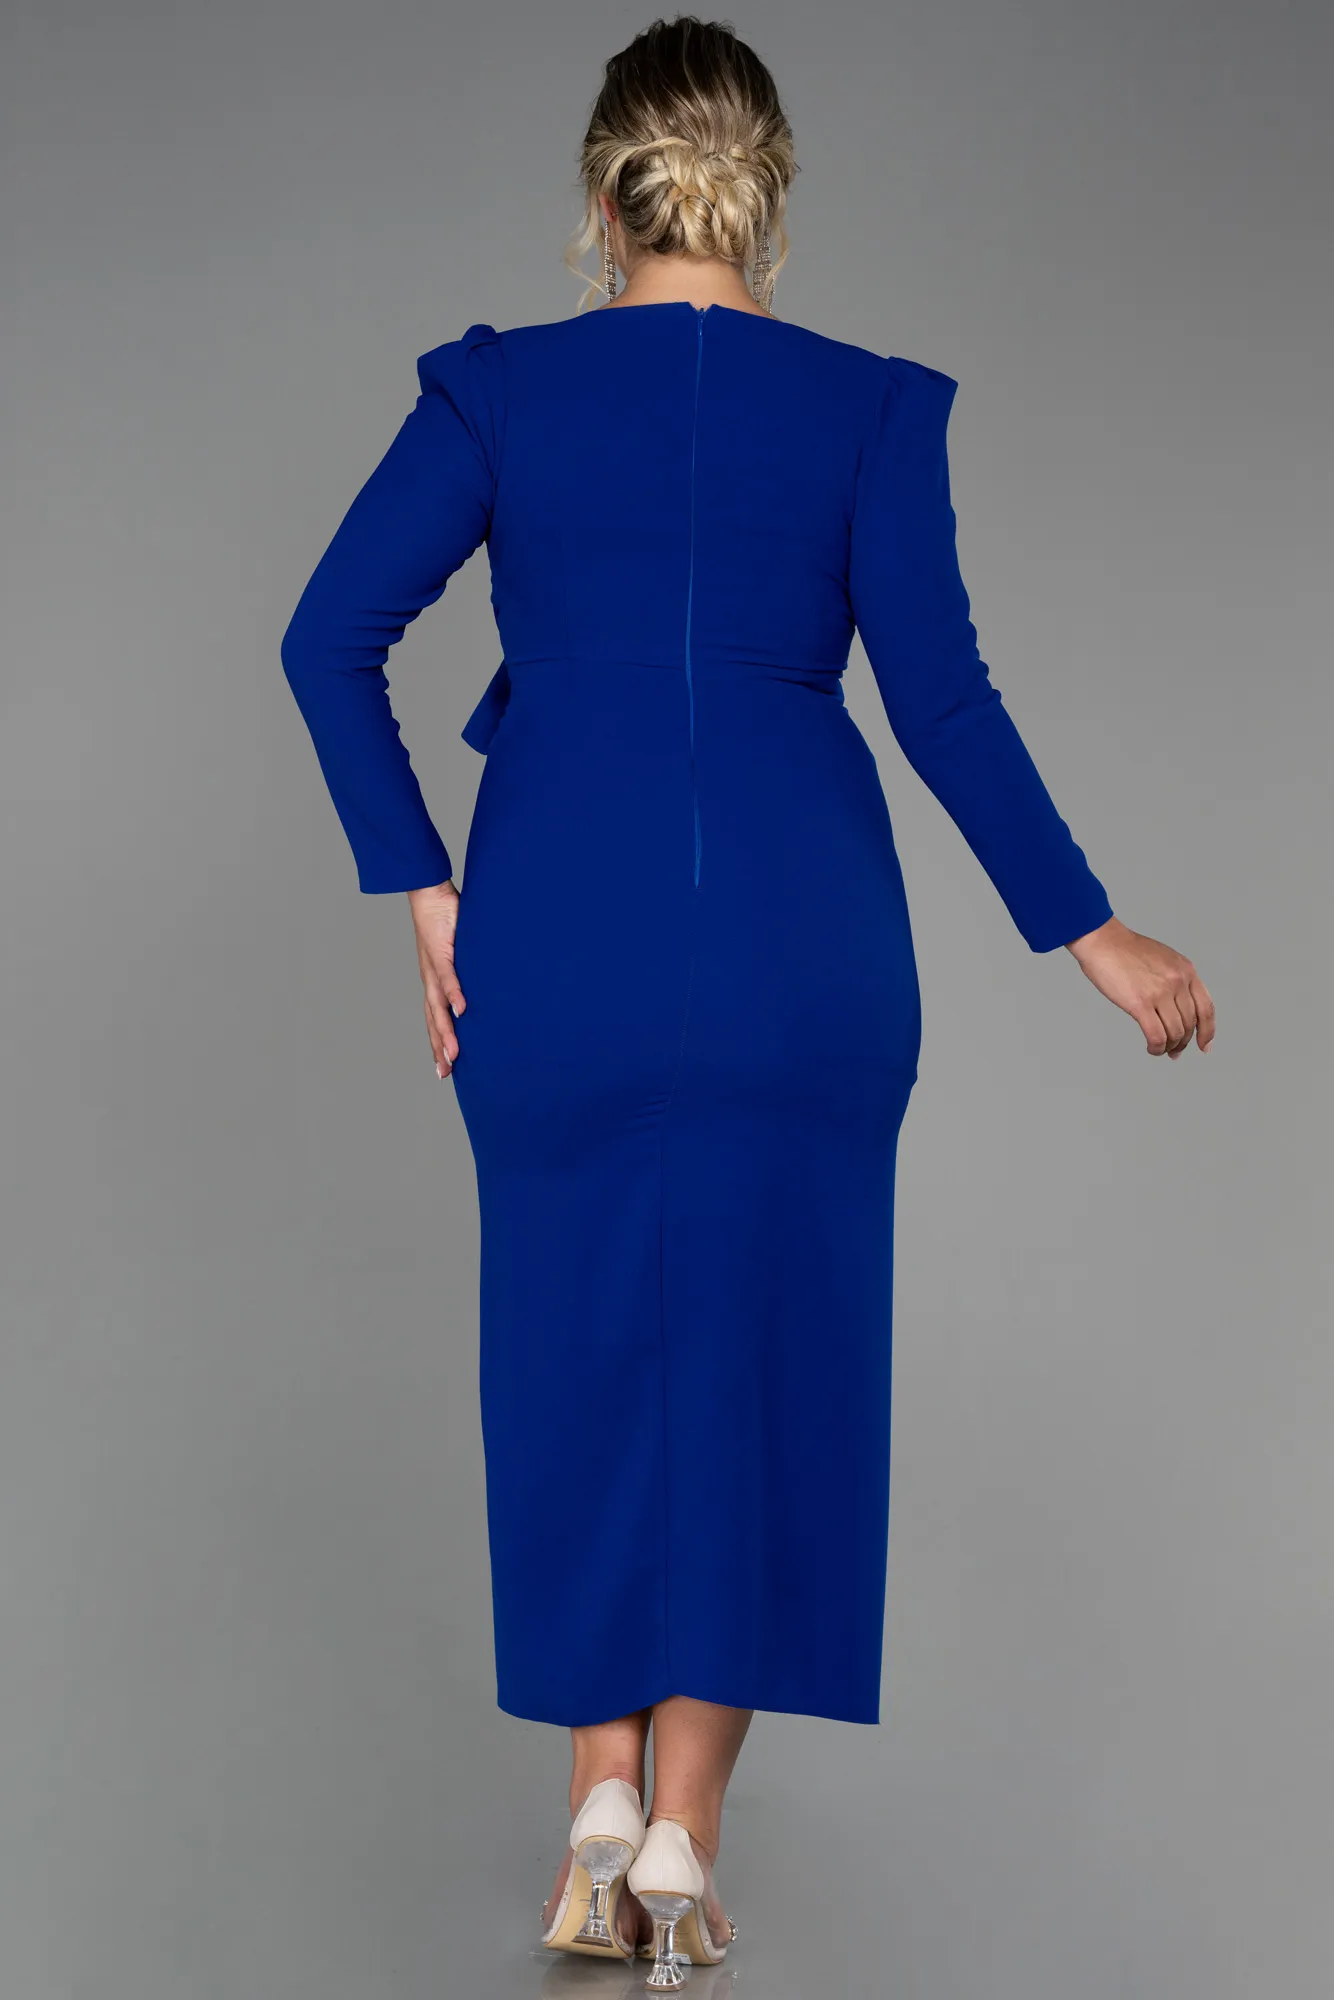 Sax Blue-Midi Plus Size Evening Dress ABK1535